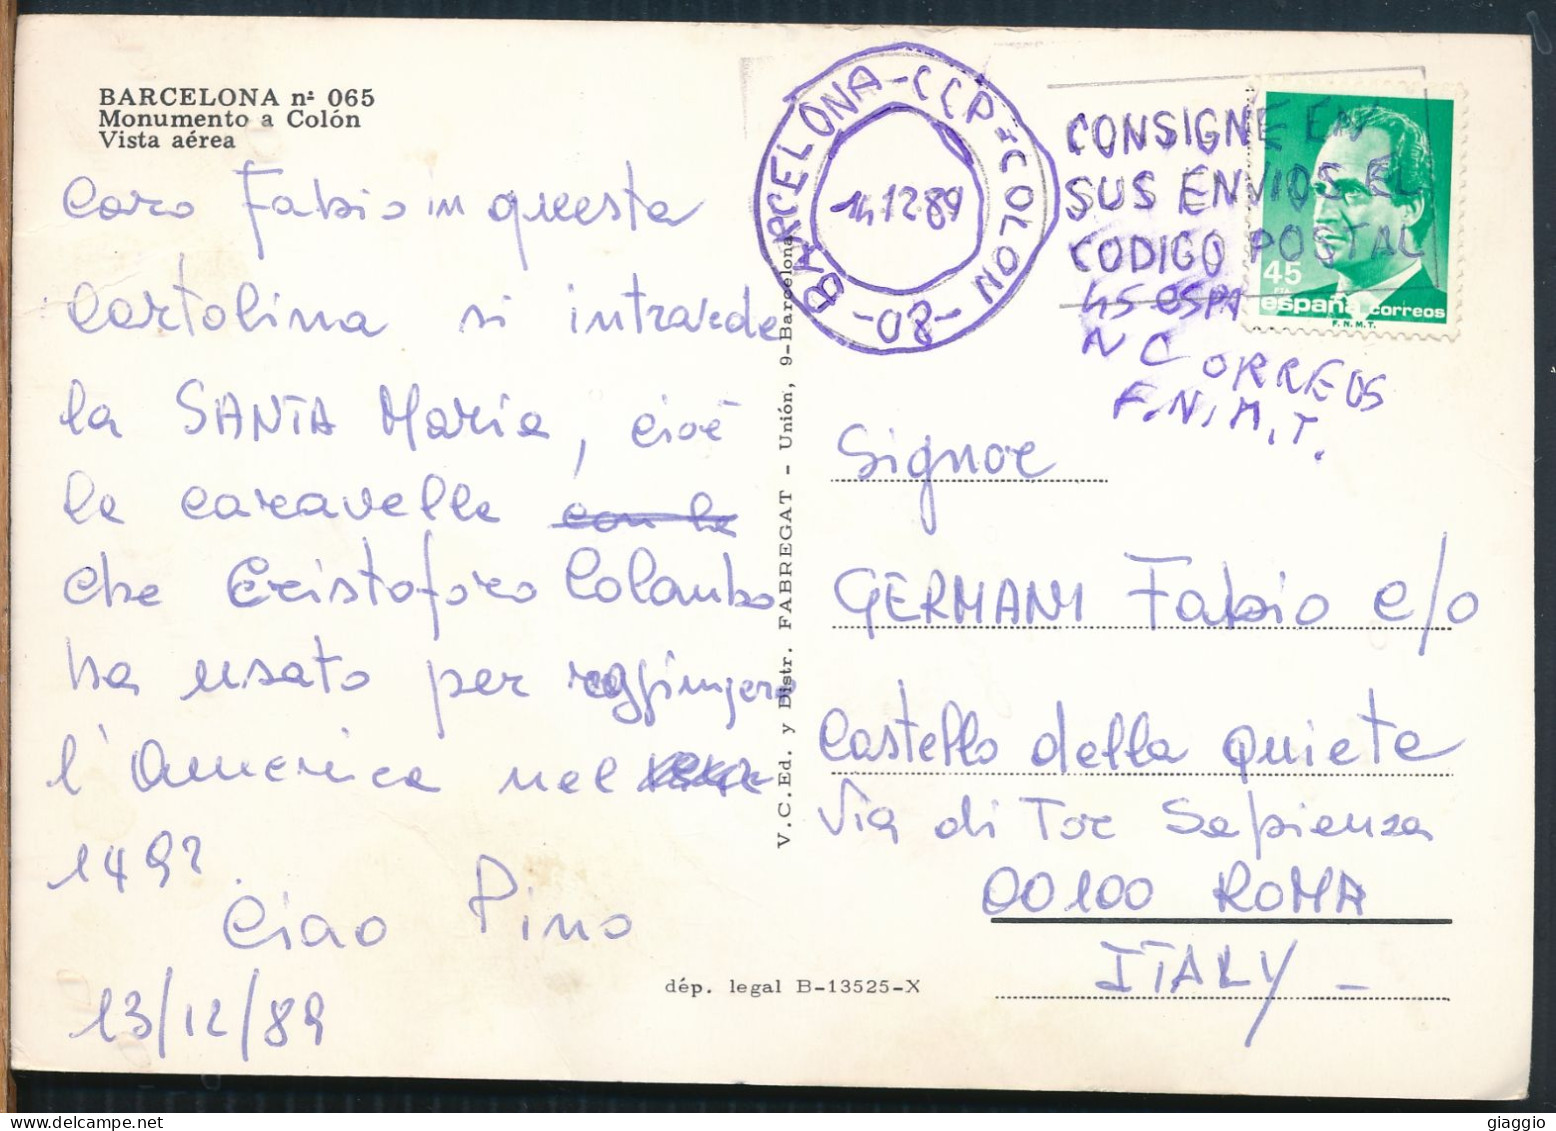 °°° 31030 - SPAIN - BARCELONA - MONUMENTO A COLON - VISTA AEREA - 1989 With Stamps °°° - Barcelona